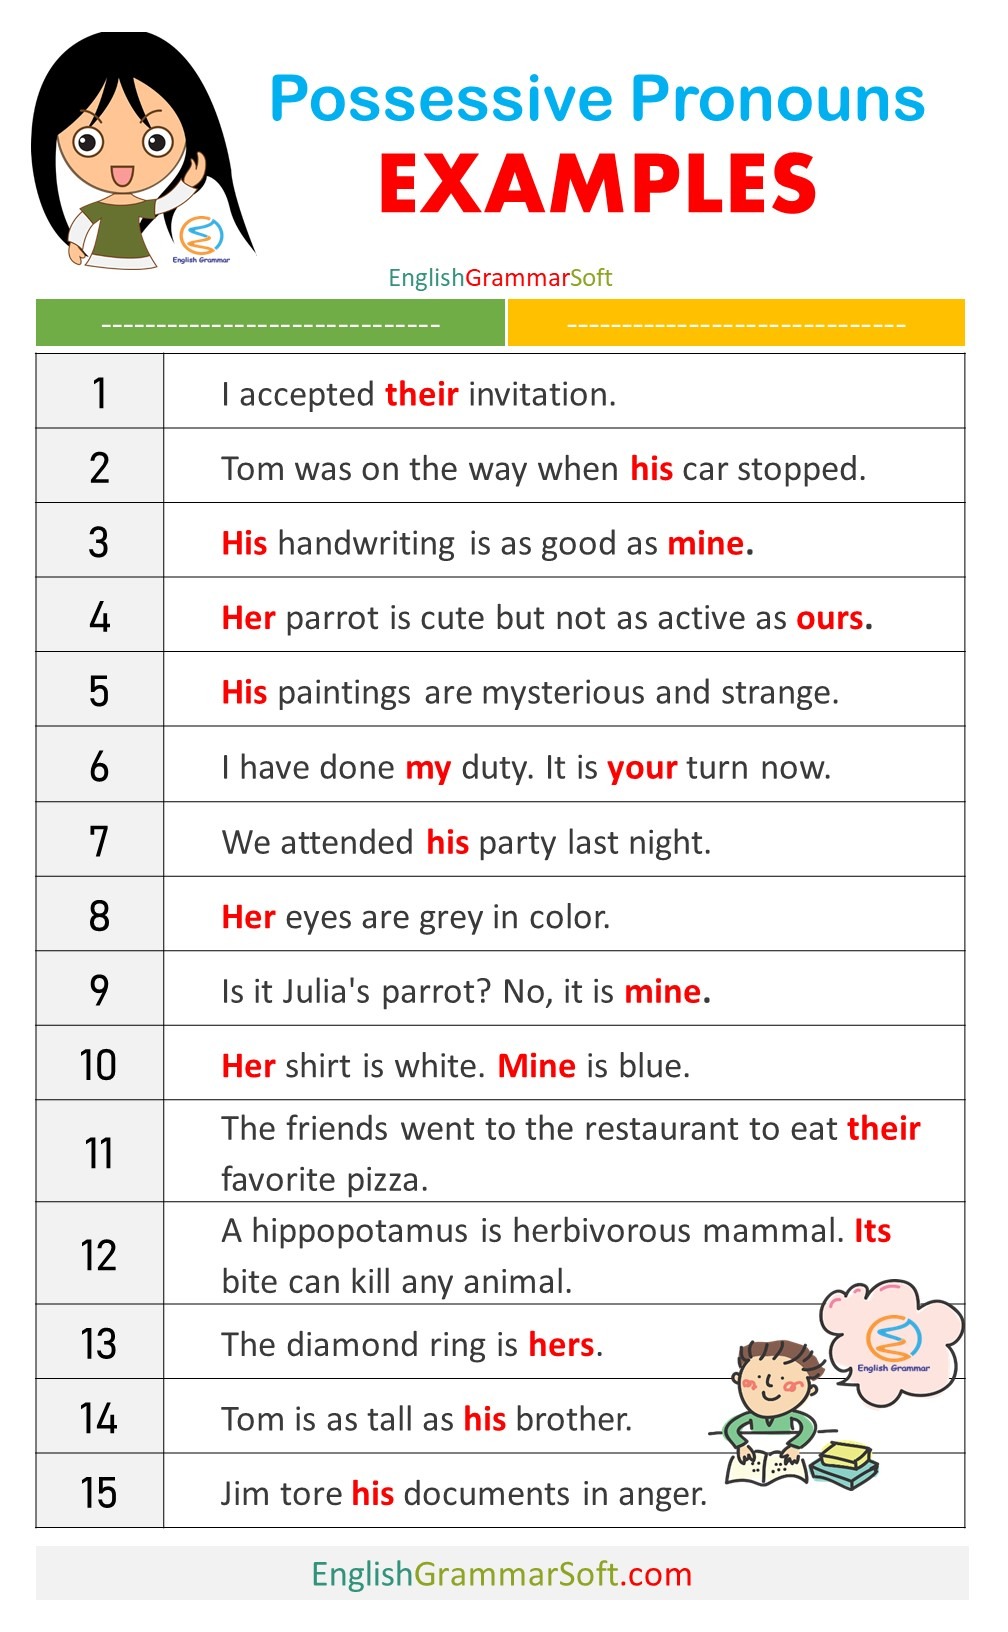 10 Contoh Kalimat Possessive Pronouns Bahasa Inggris Examples Hot Sex Picture